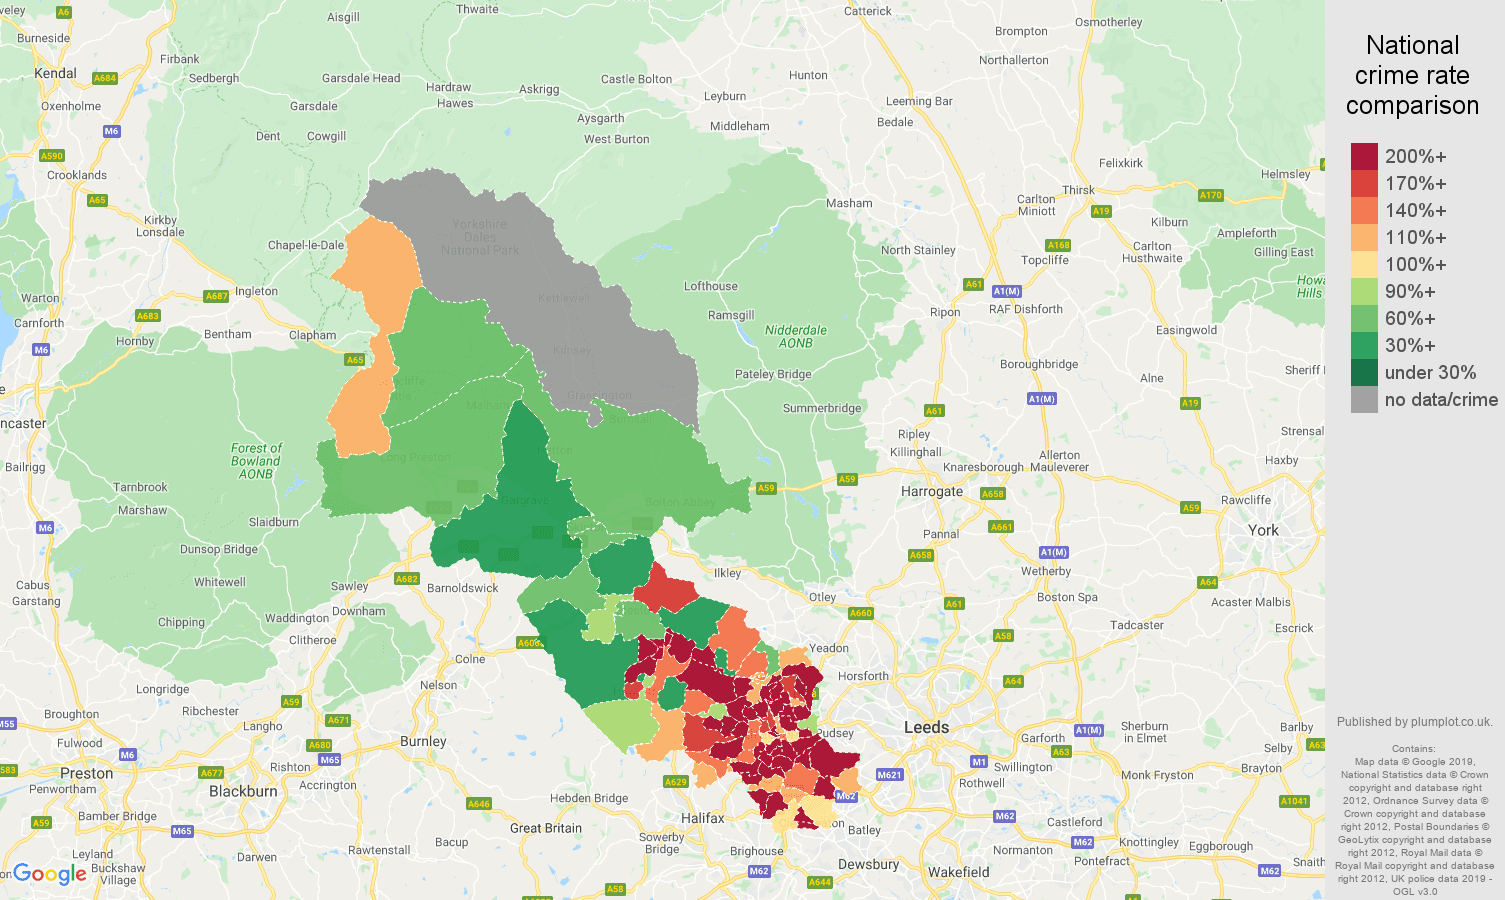 Bradford other crime rate comparison map